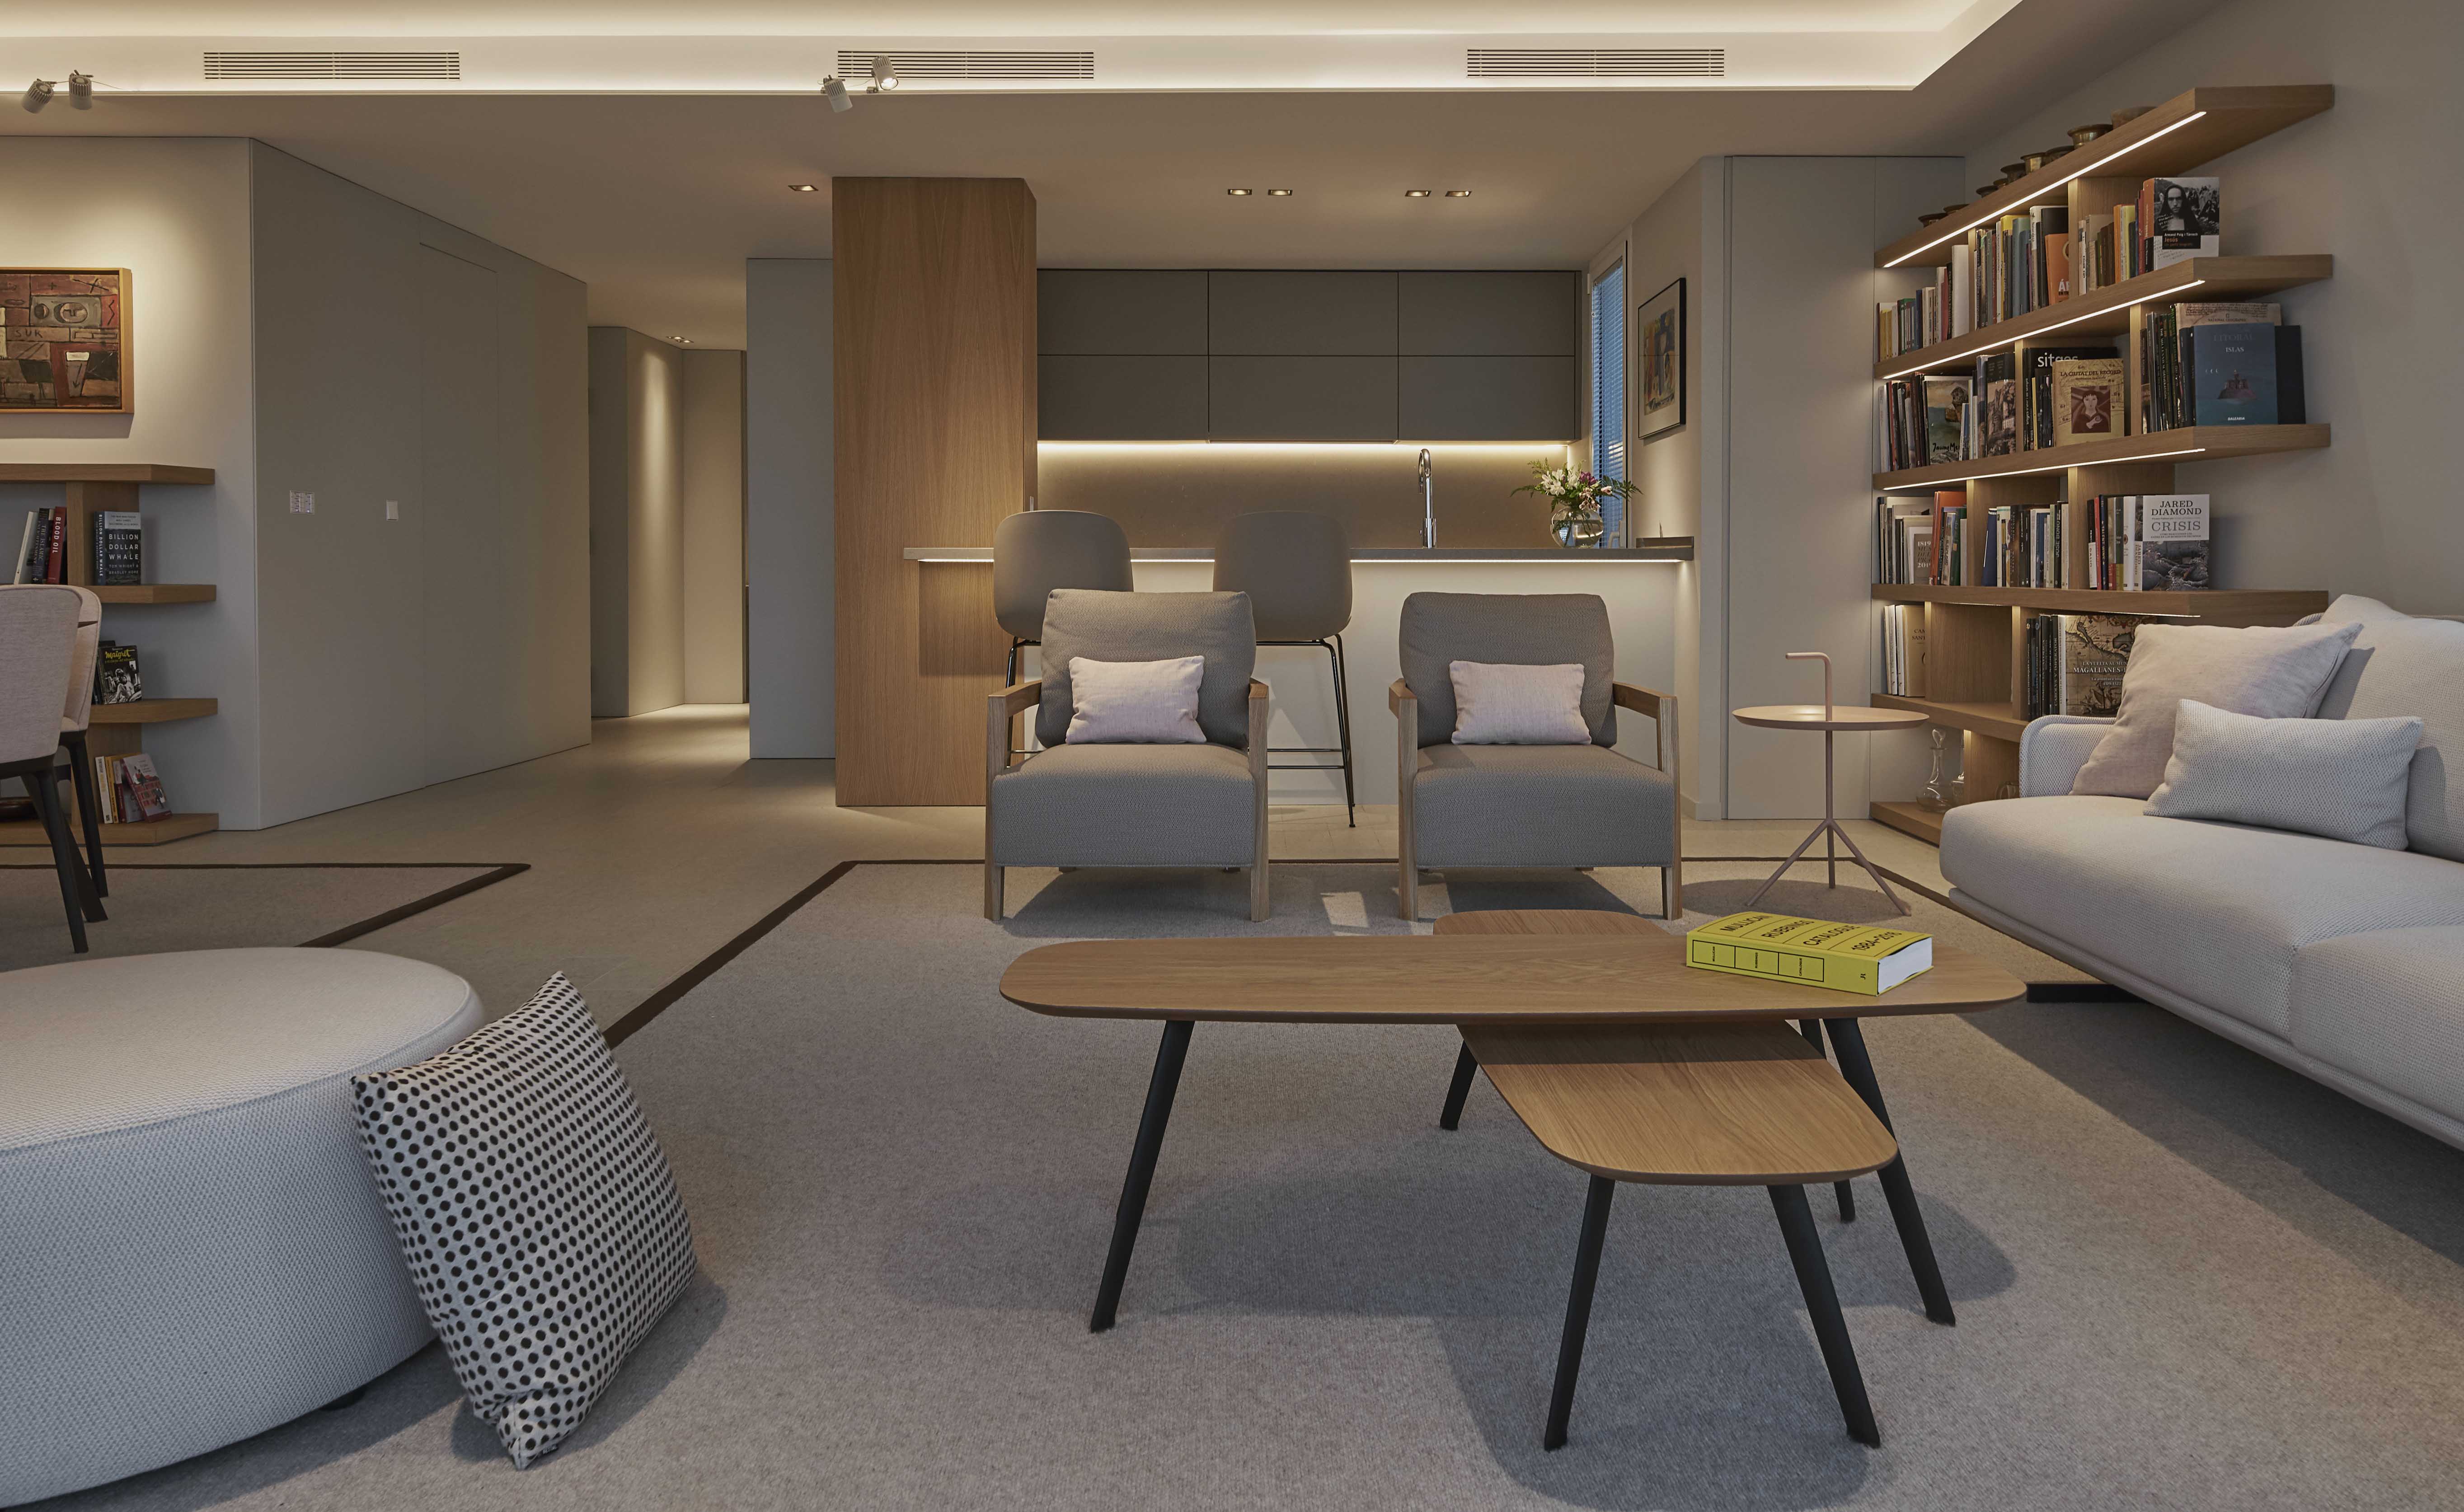 modern living space design in oak wood and grey tones